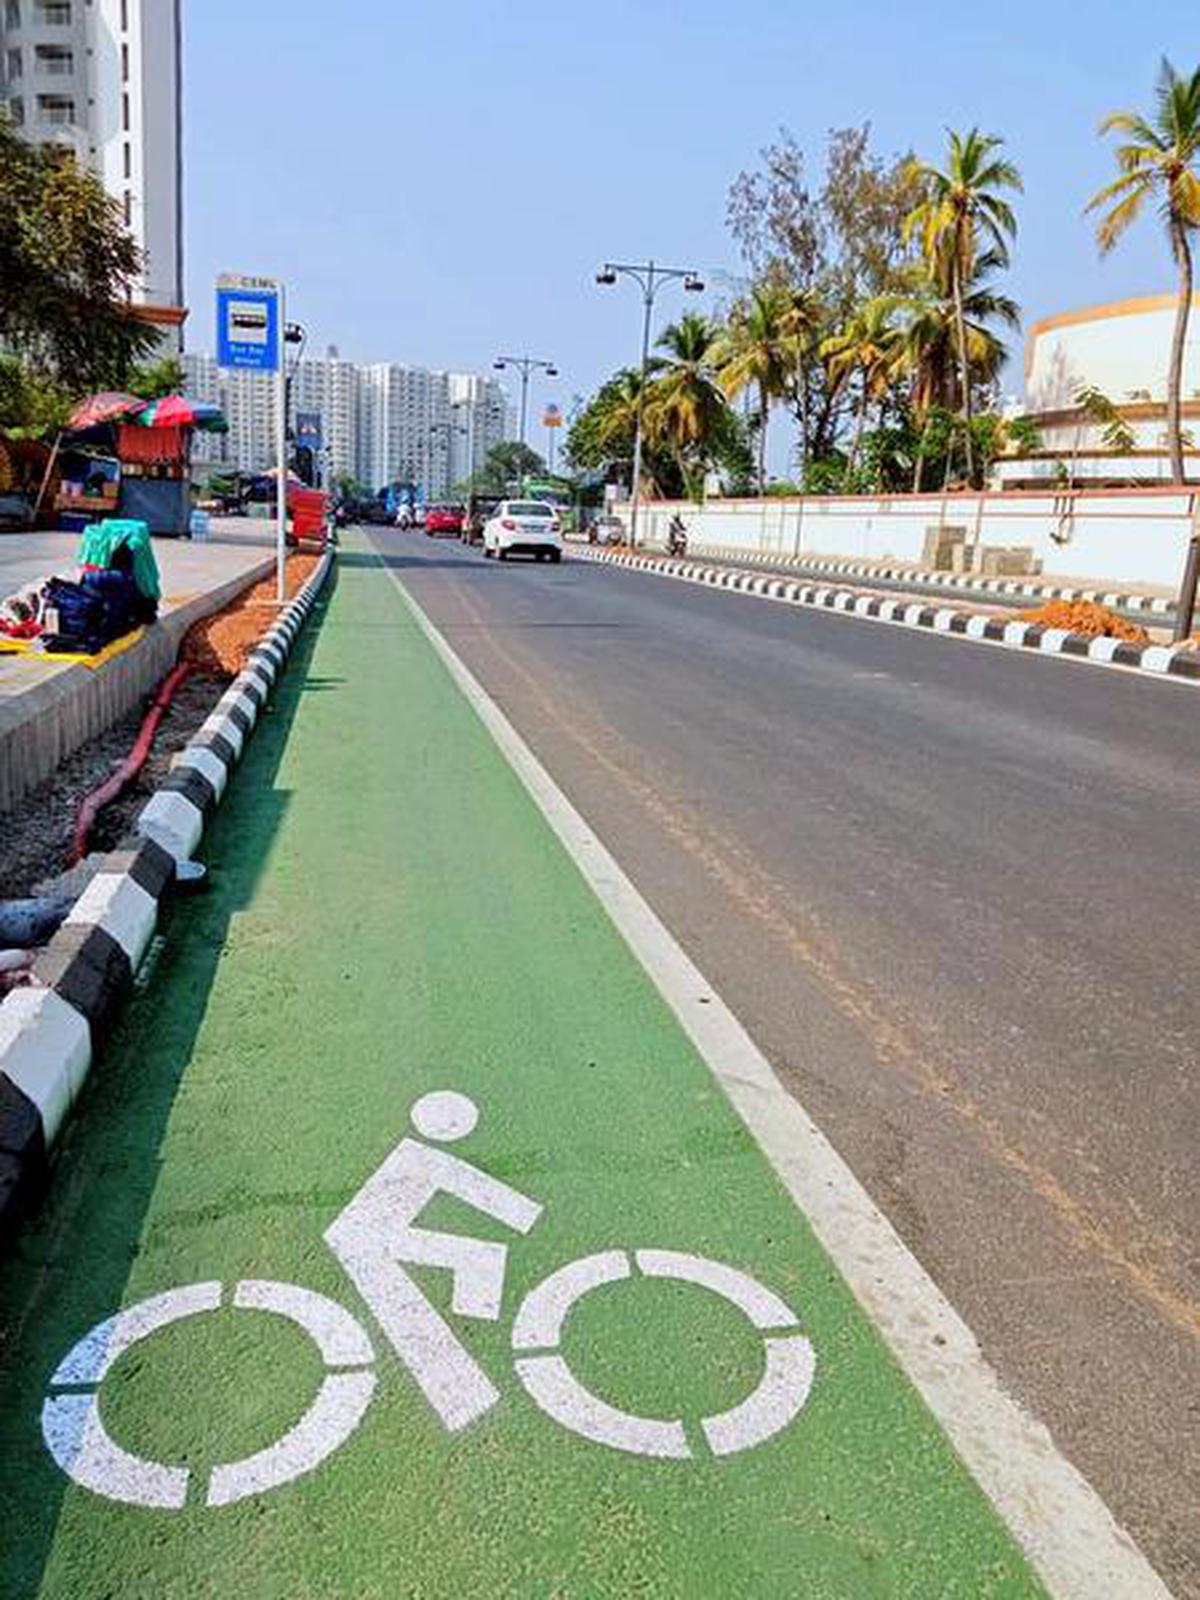 Cycle lane delineators on smart roads soon - The Hindu